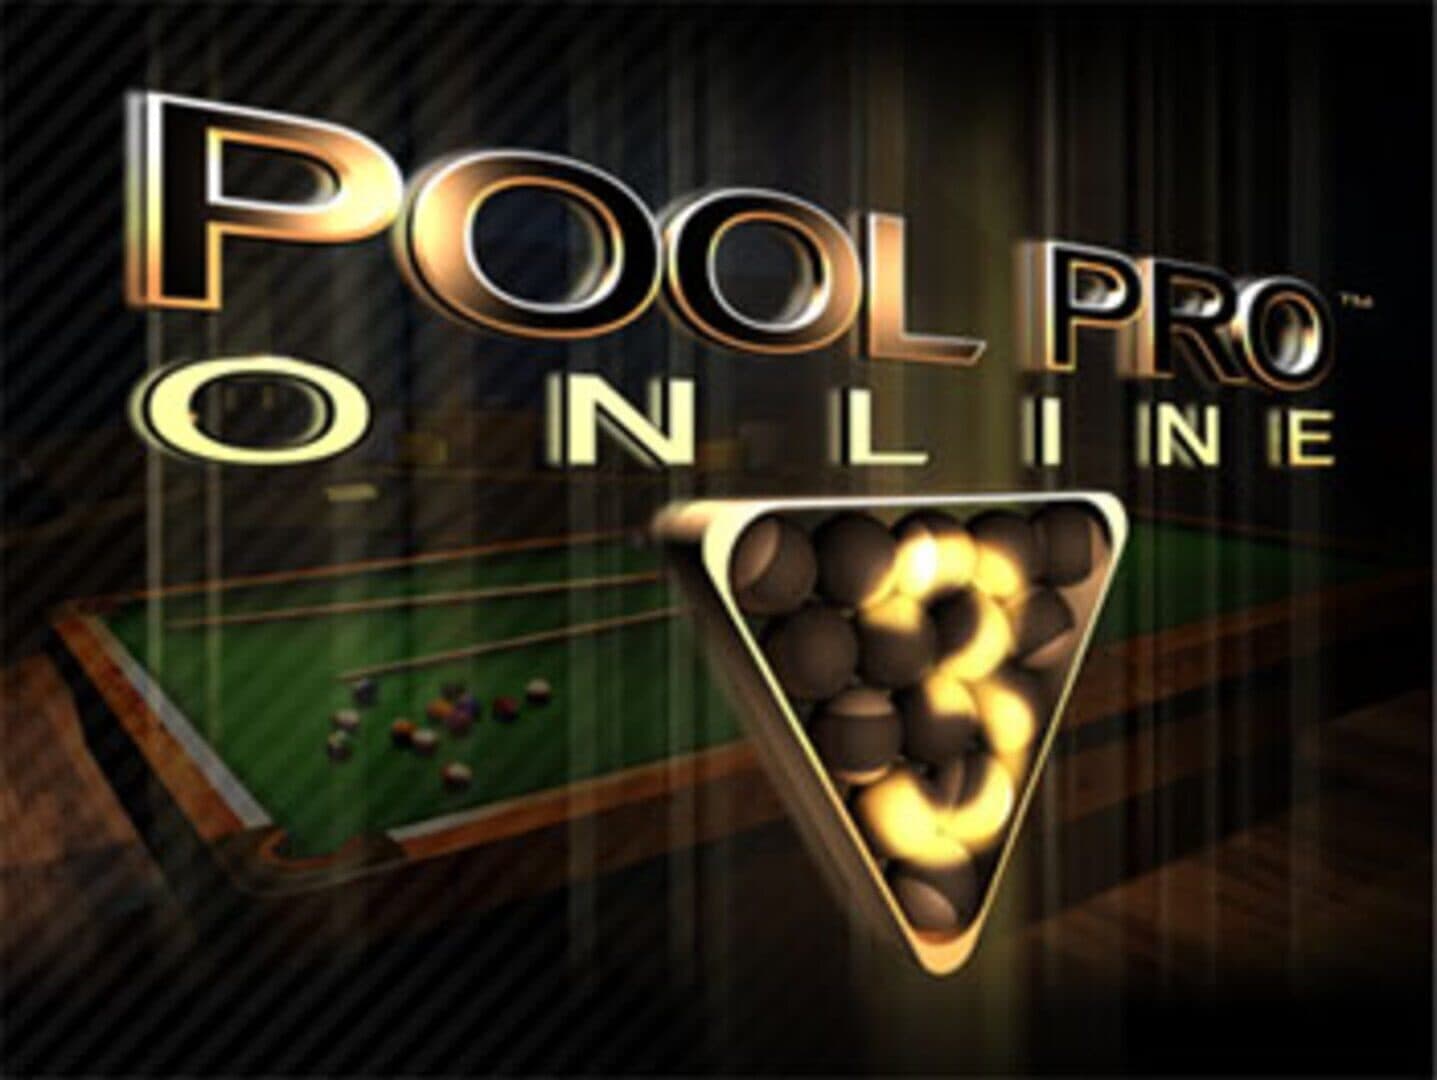 Pool Pro Online 3 cover art